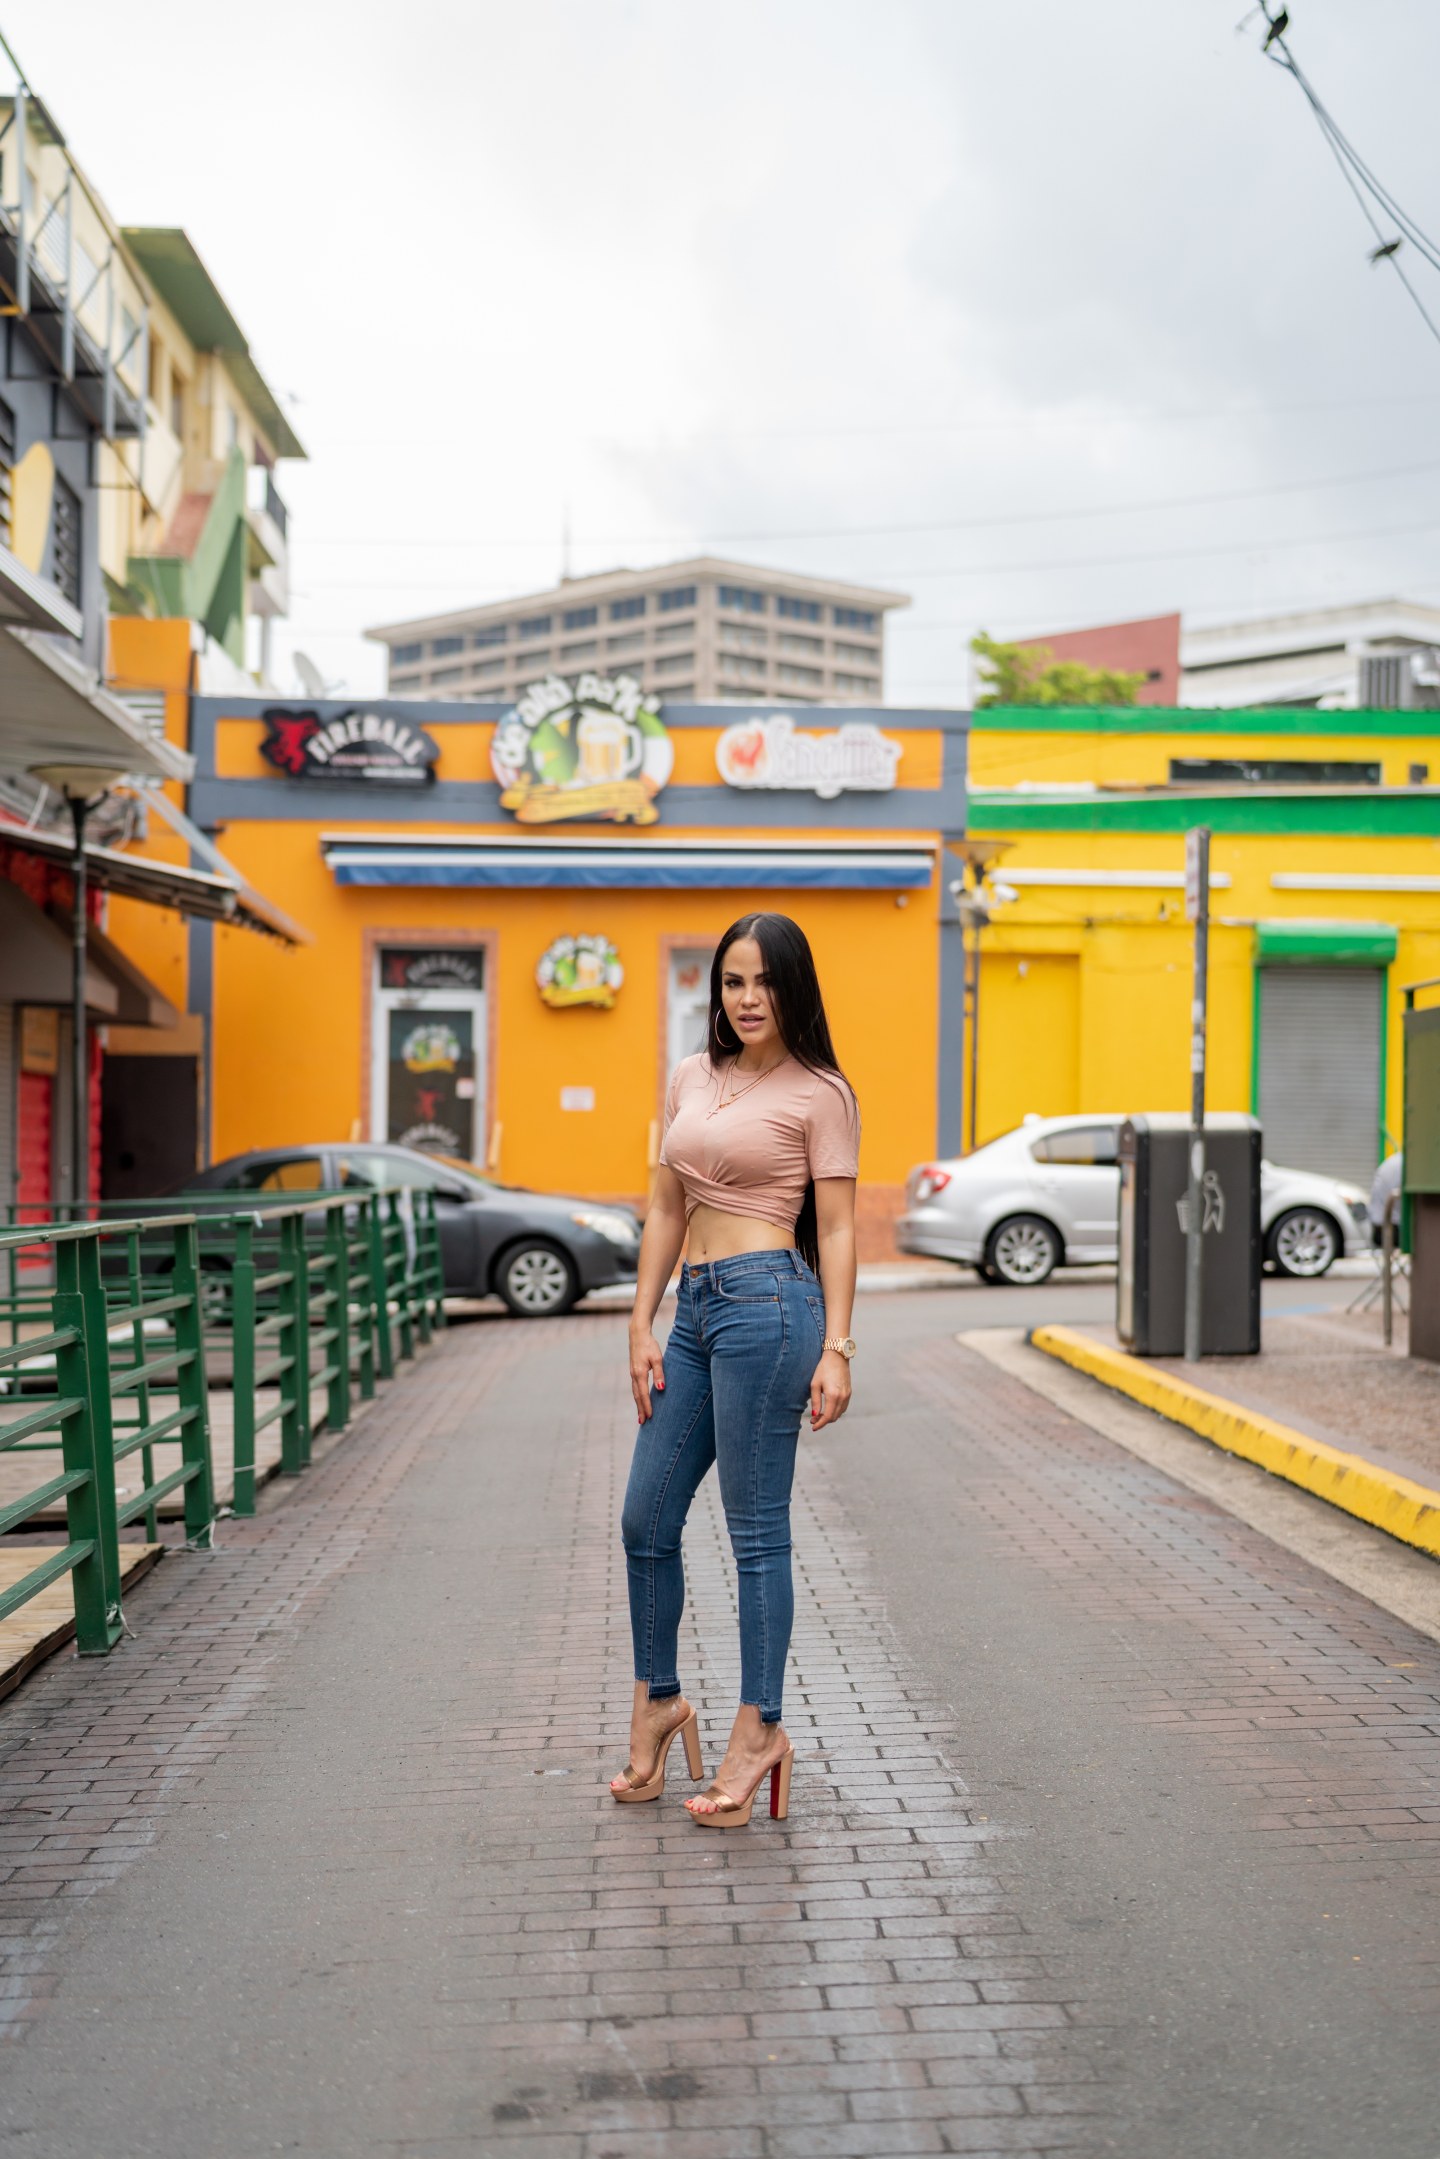 Natti Natasha is ushering in a brighter future for reggaeton